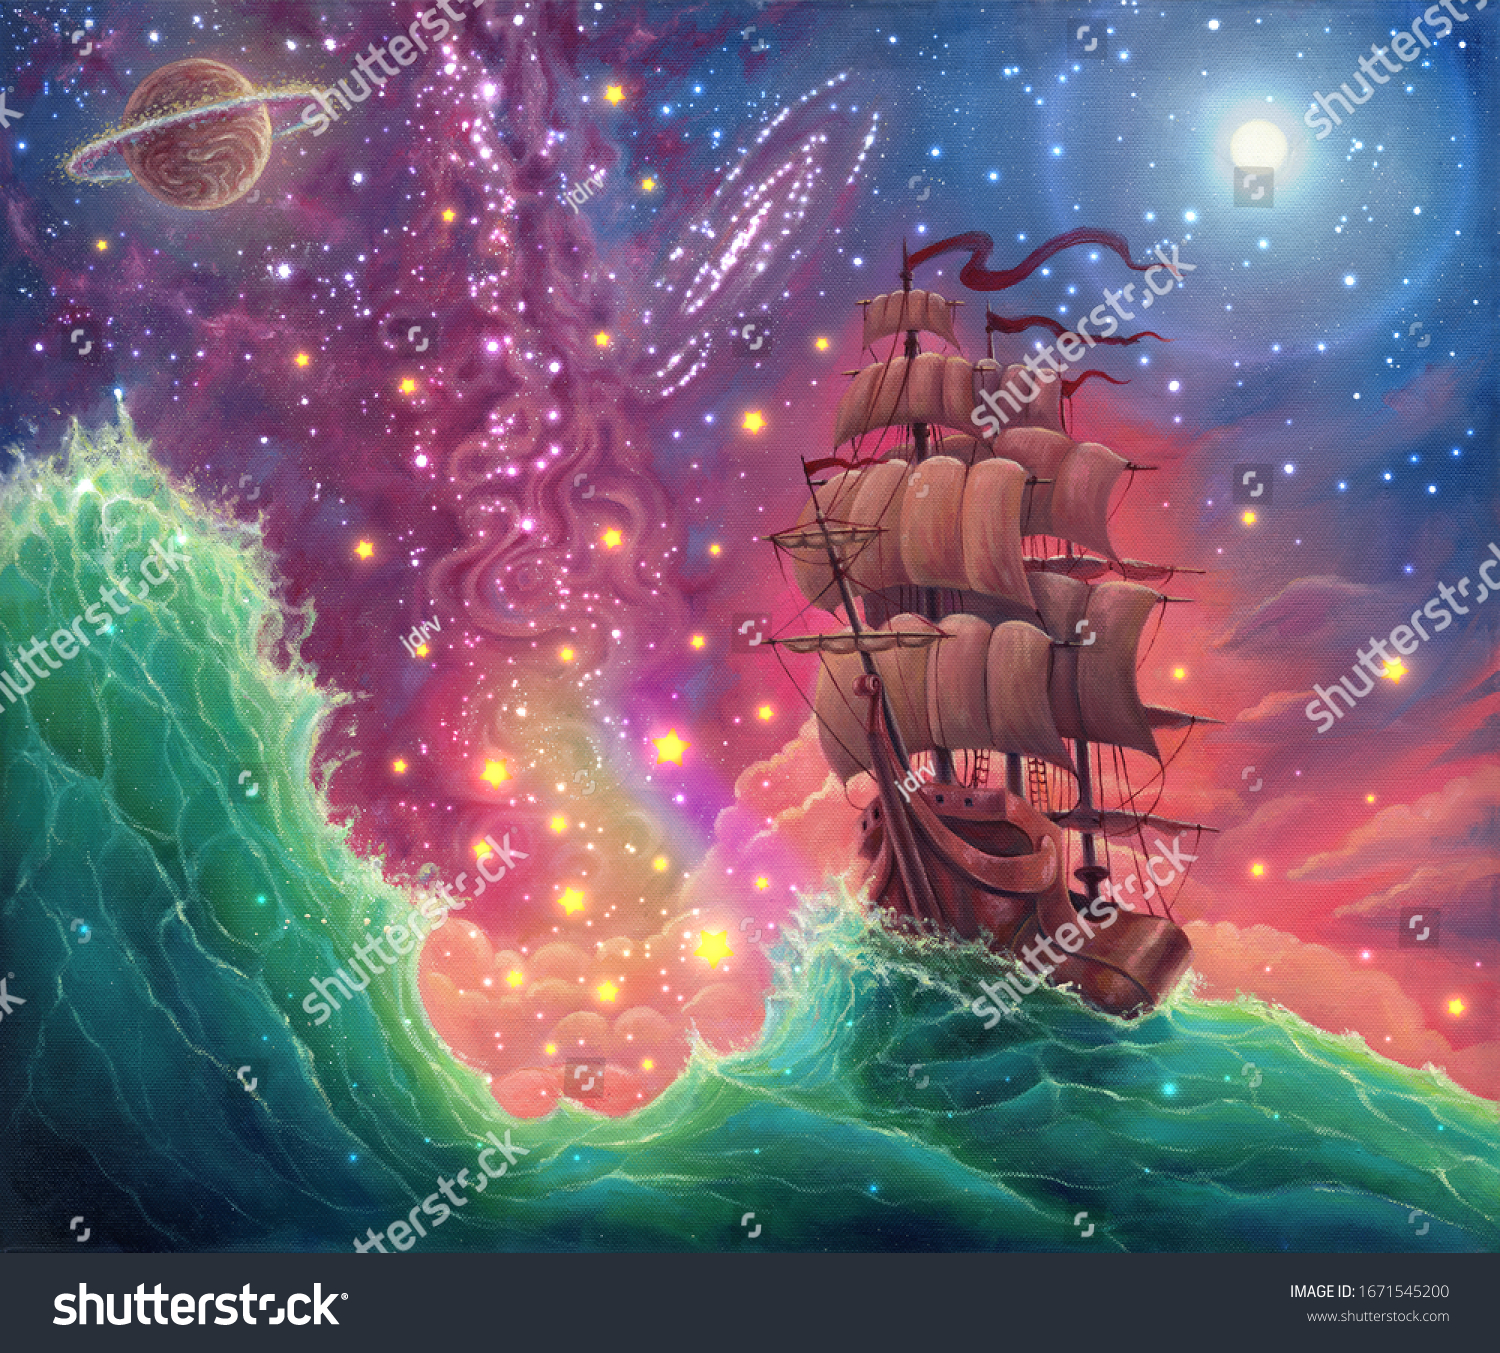 Babylon 5 Planets Ships Cruiser Oil Painting HD Print Decor Art On Canvas 5PCS 